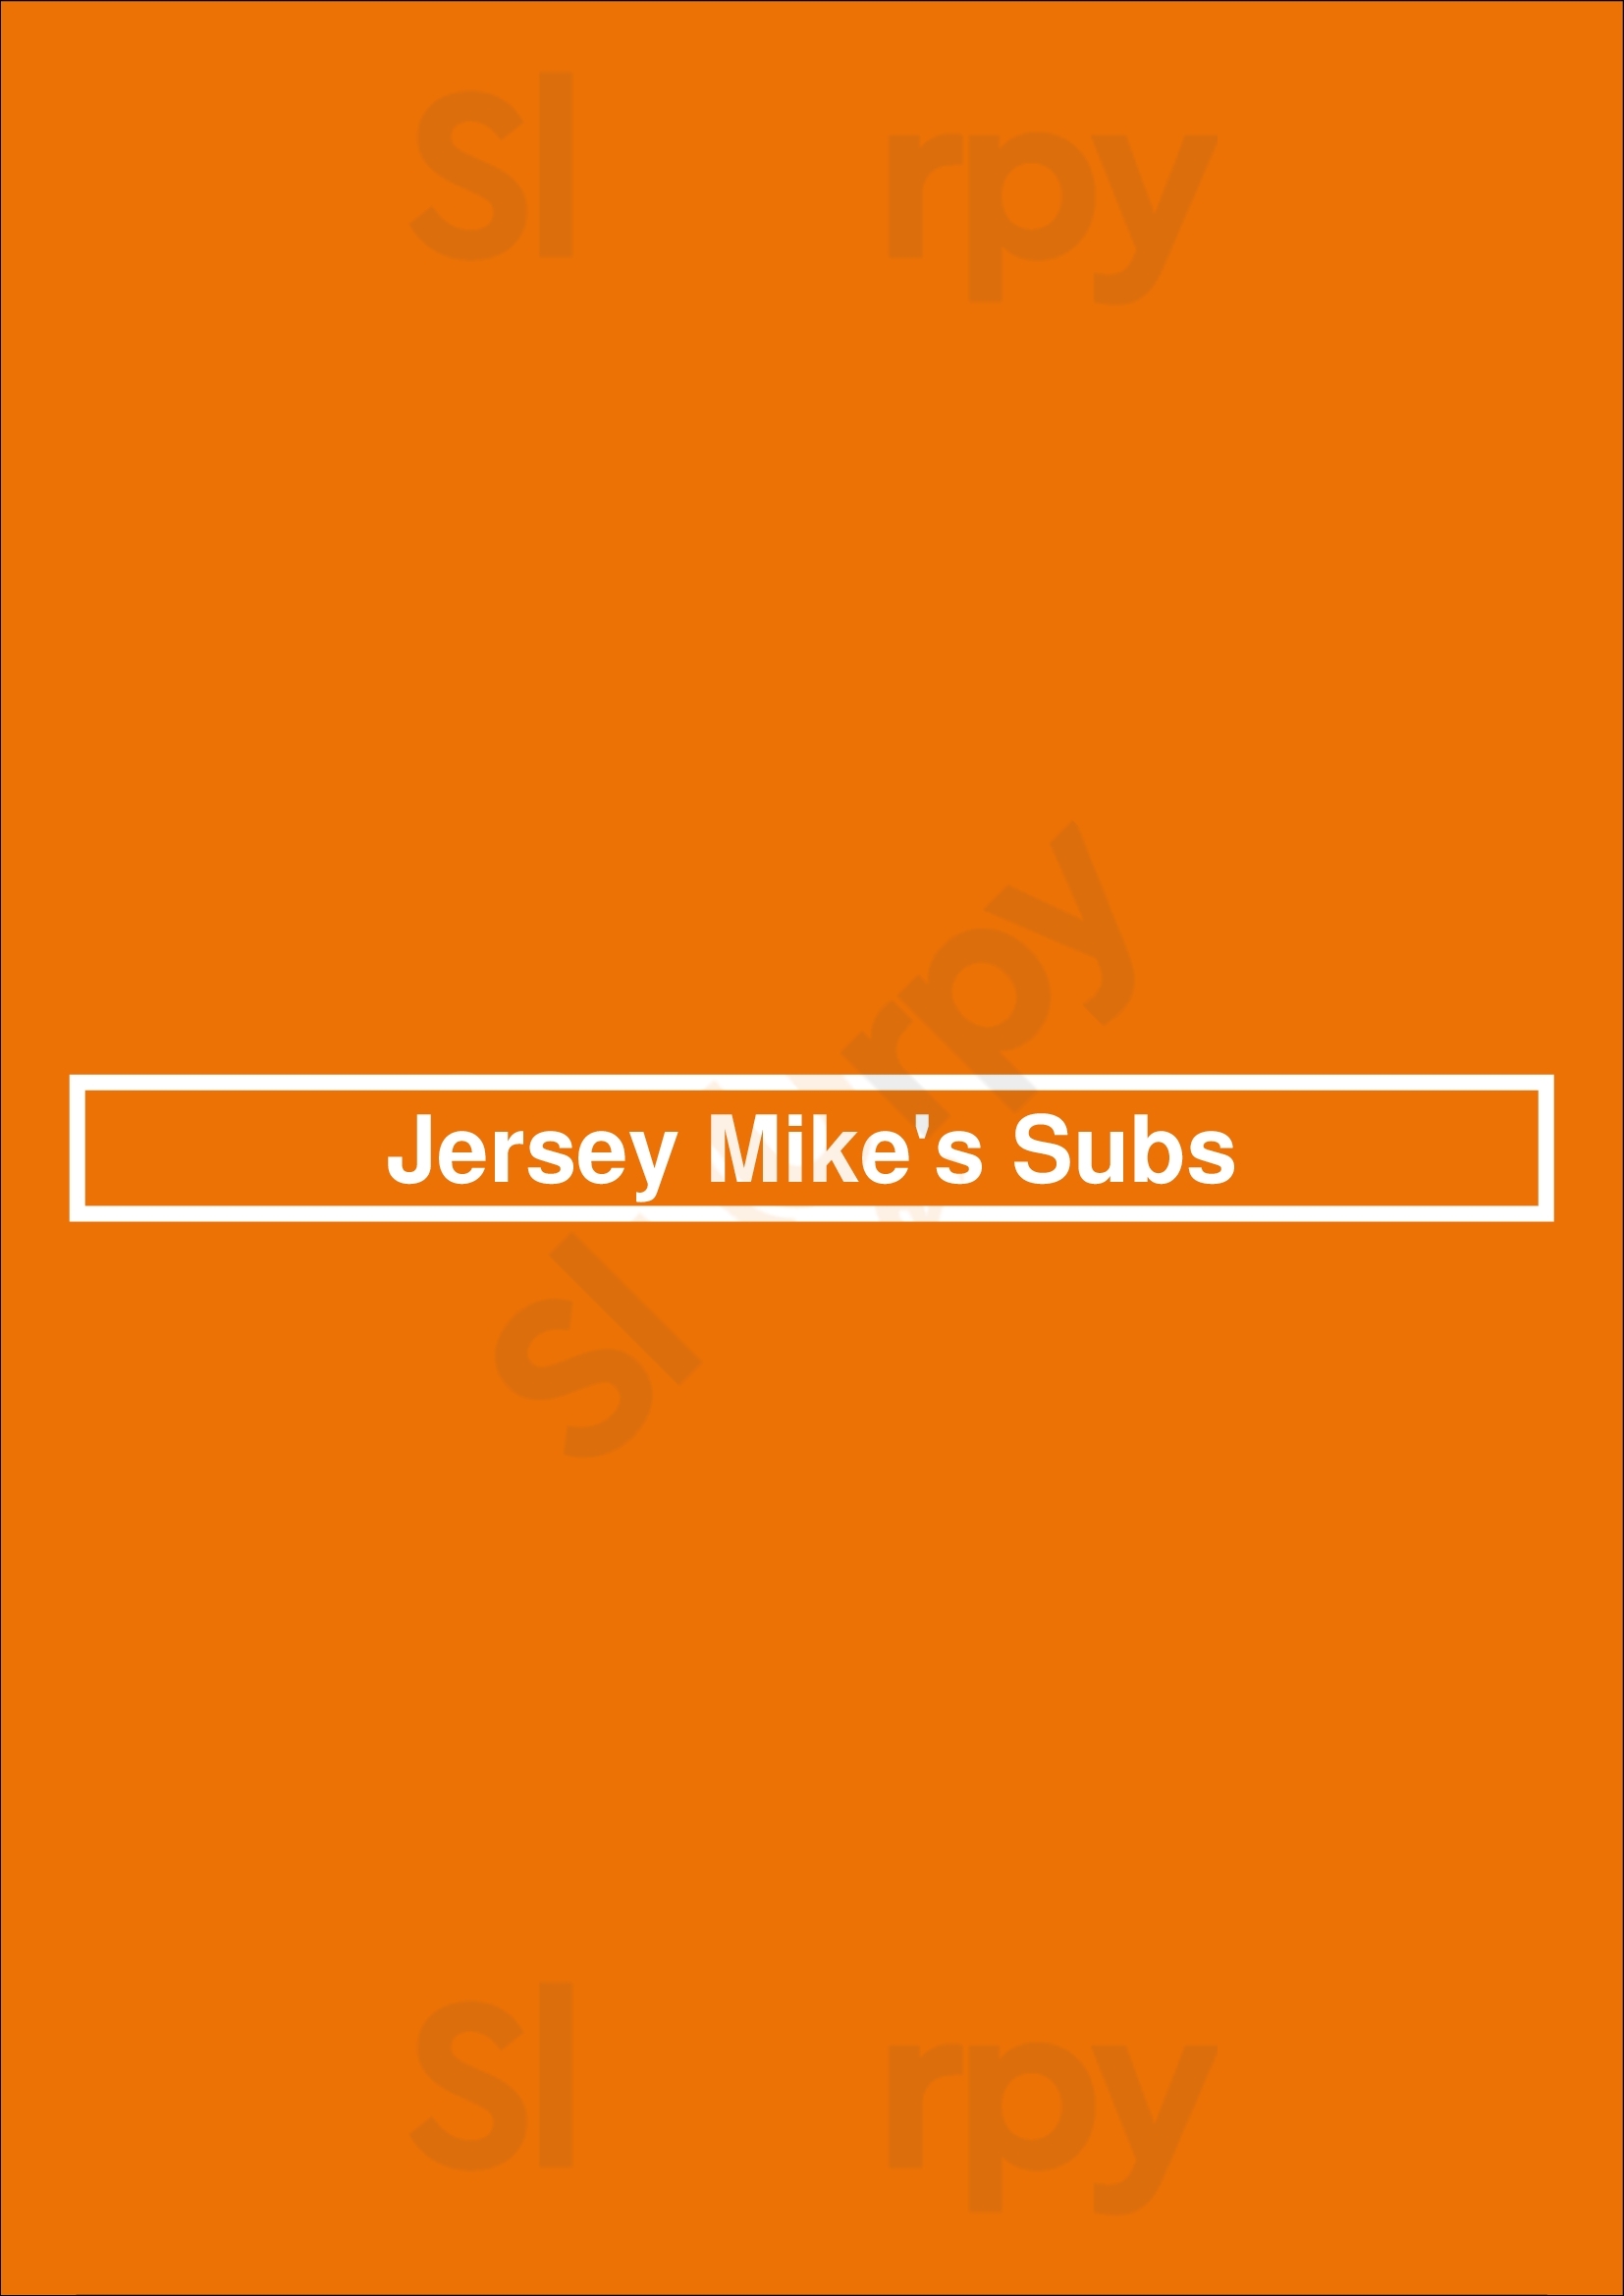 Jersey Mike's Subs Jacksonville Menu - 1